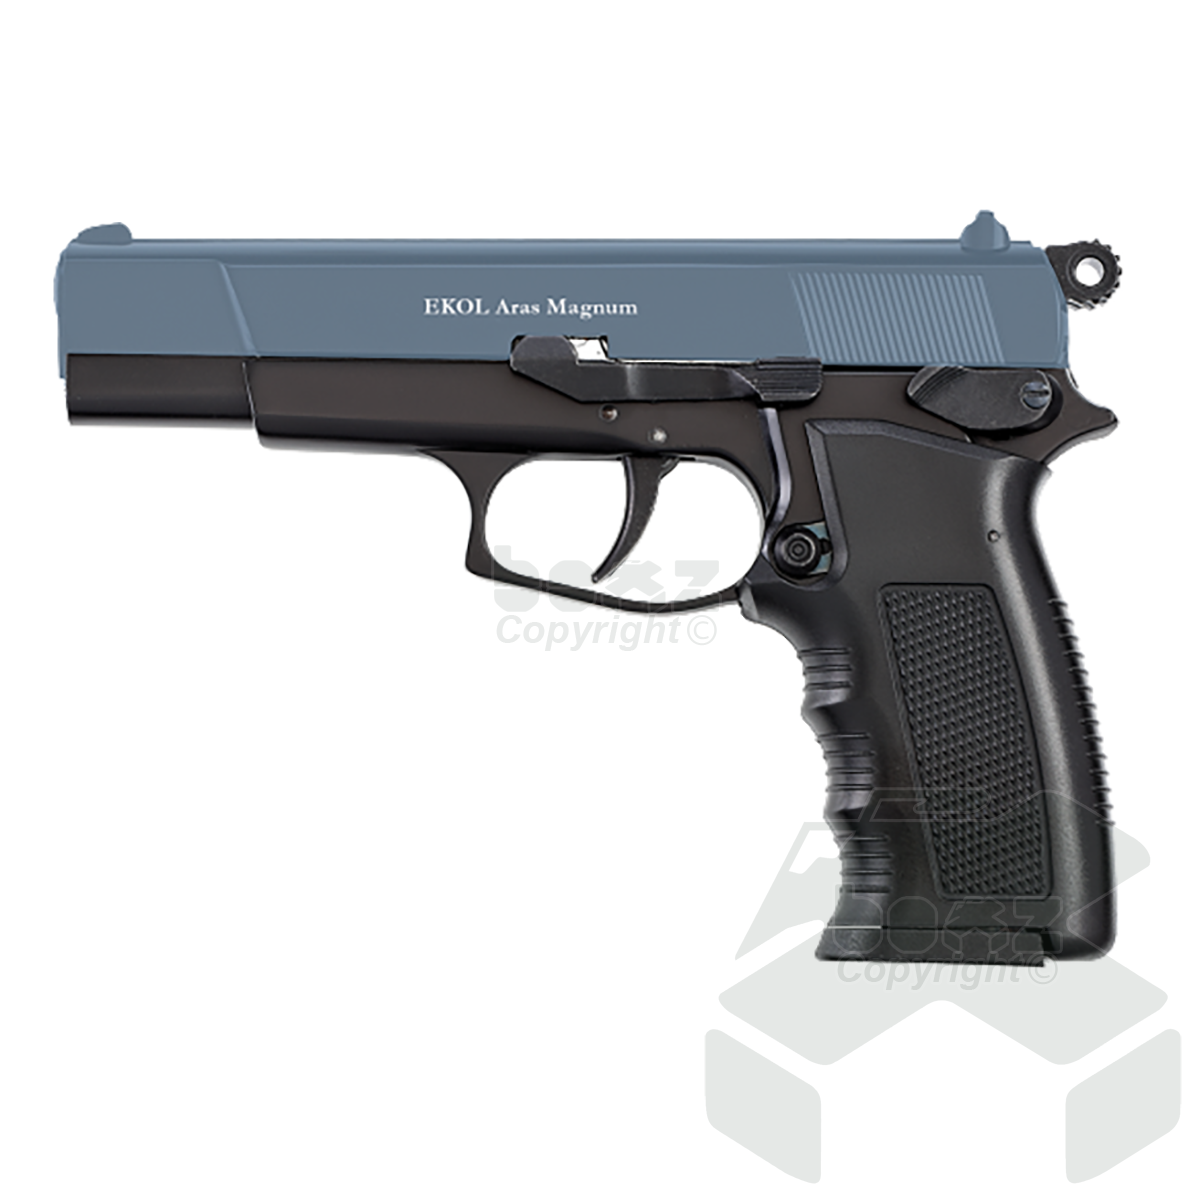 Ekol Aras Magnum Blank Firing Pistol - 9mm